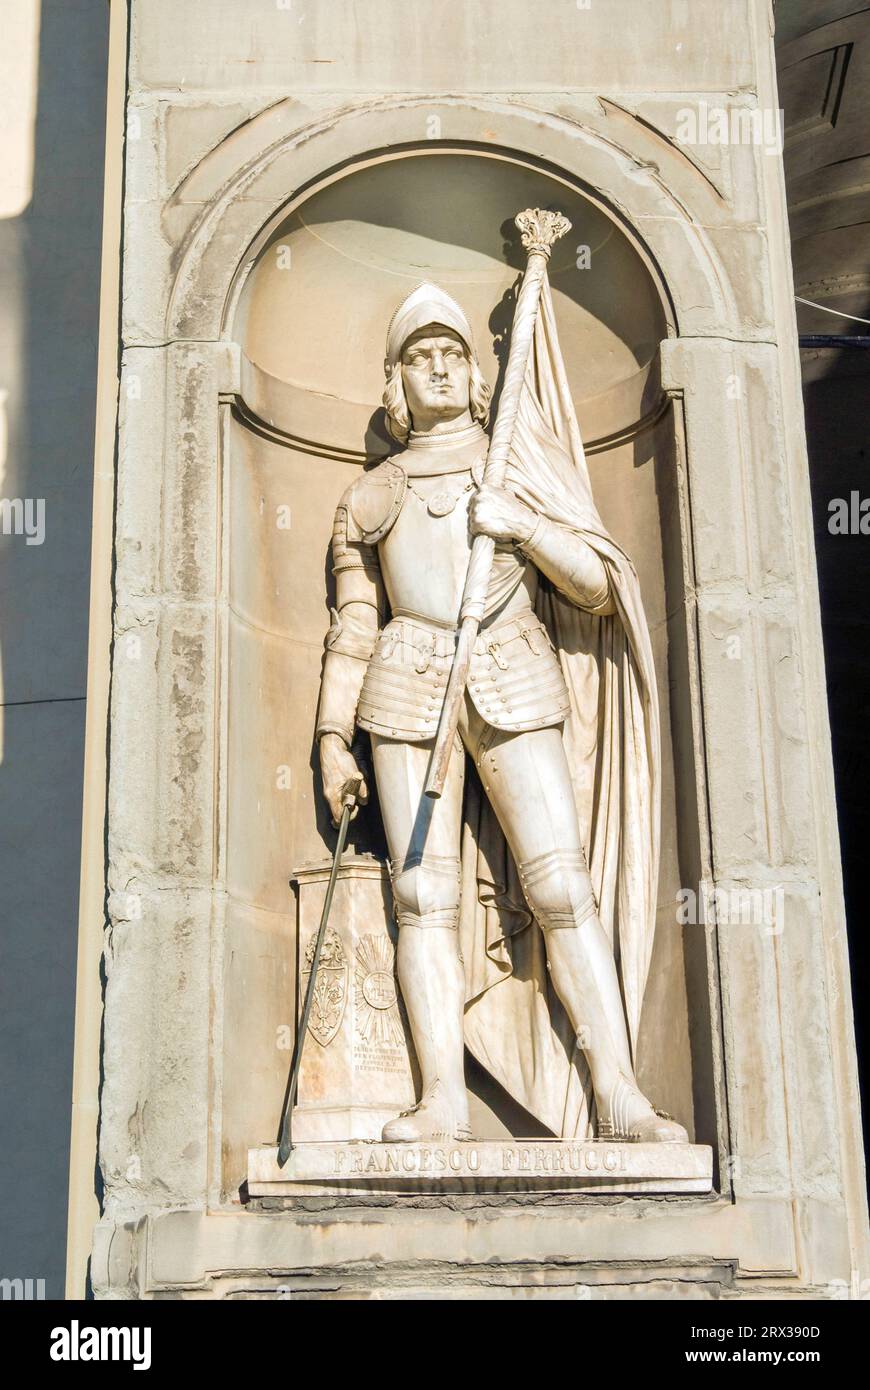 Statue of Fancesco Ferrucci, Uffizi, Florence (Firenze), UNESCO World Heritage Site, Tuscany, Italy, Europe Stock Photo